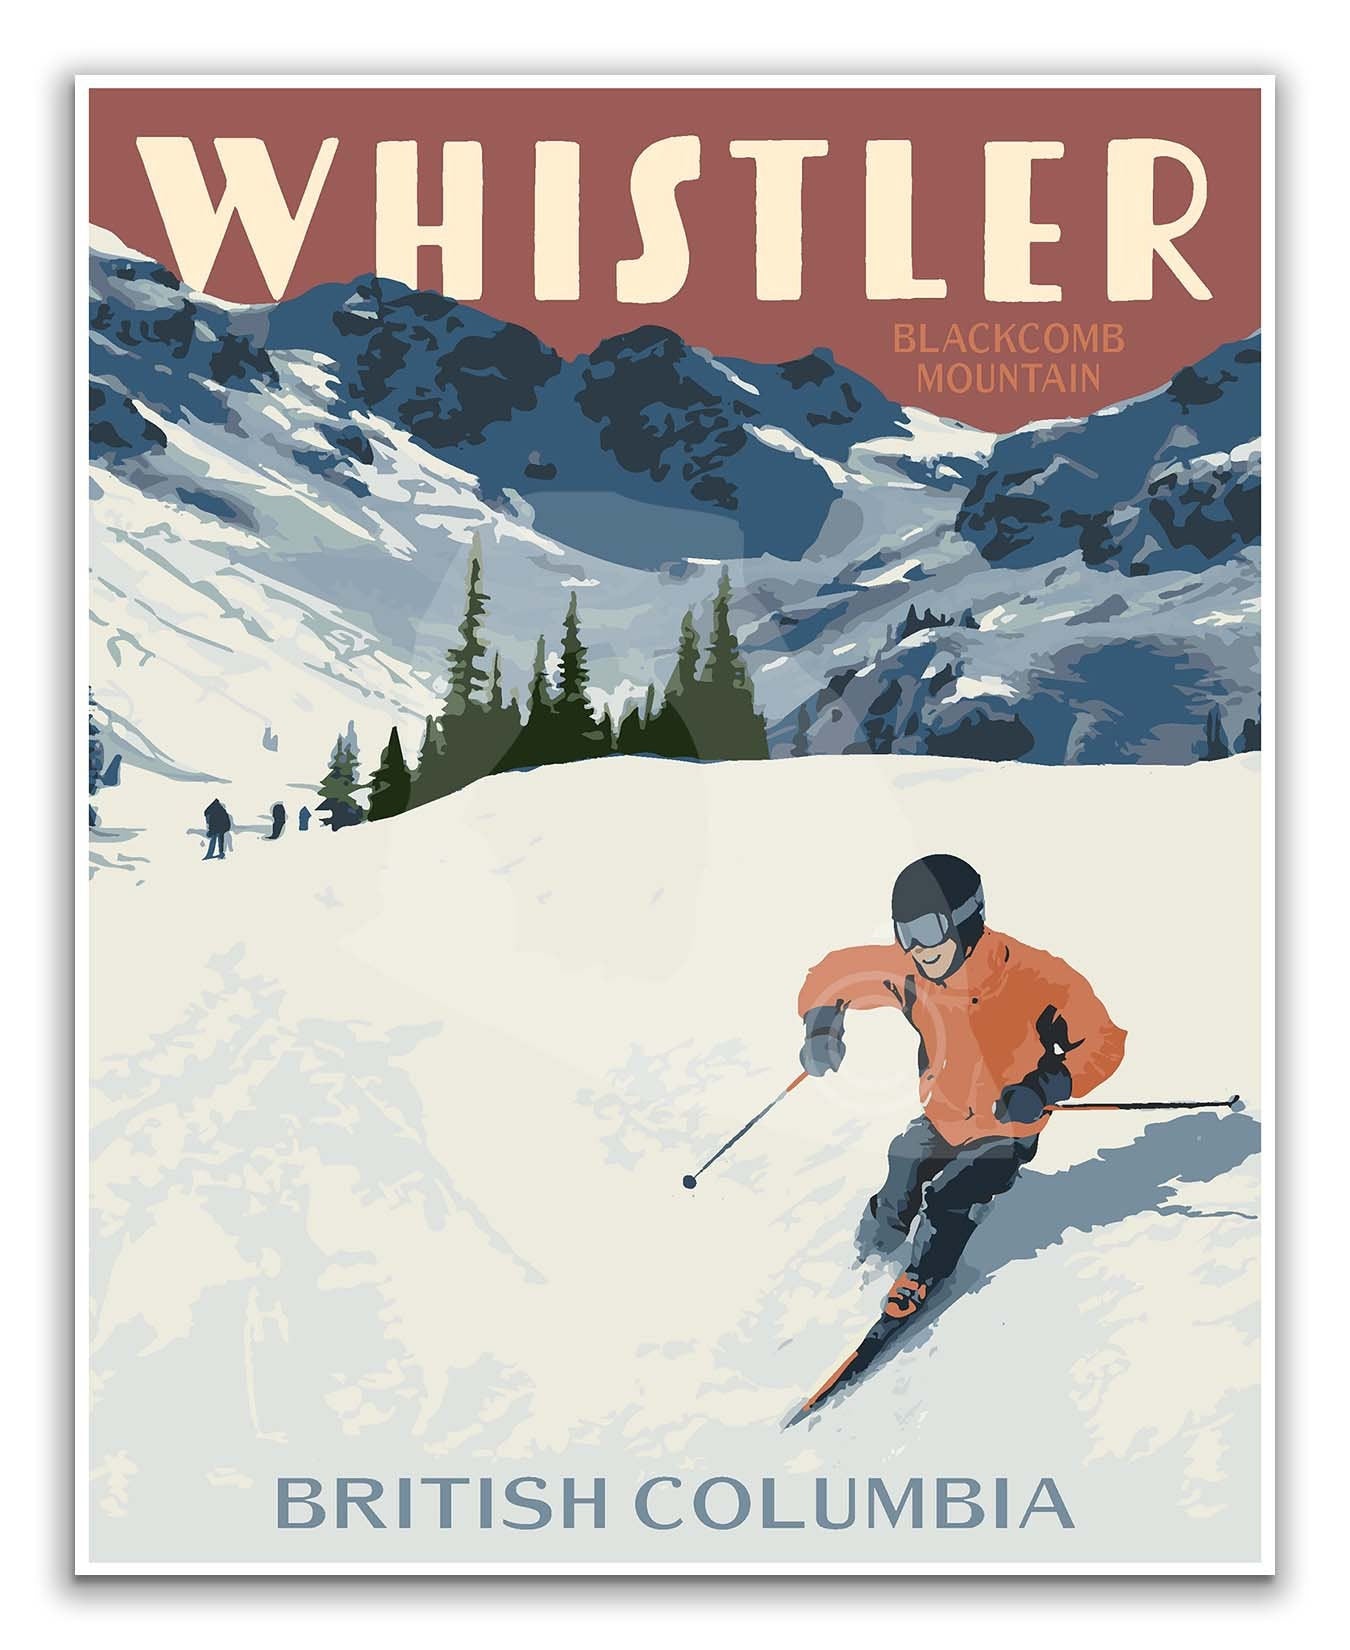 Whistler Blackcomb Mountain Print, Whistler British Columbia Skiing Poster, Vintage Style Travel Art